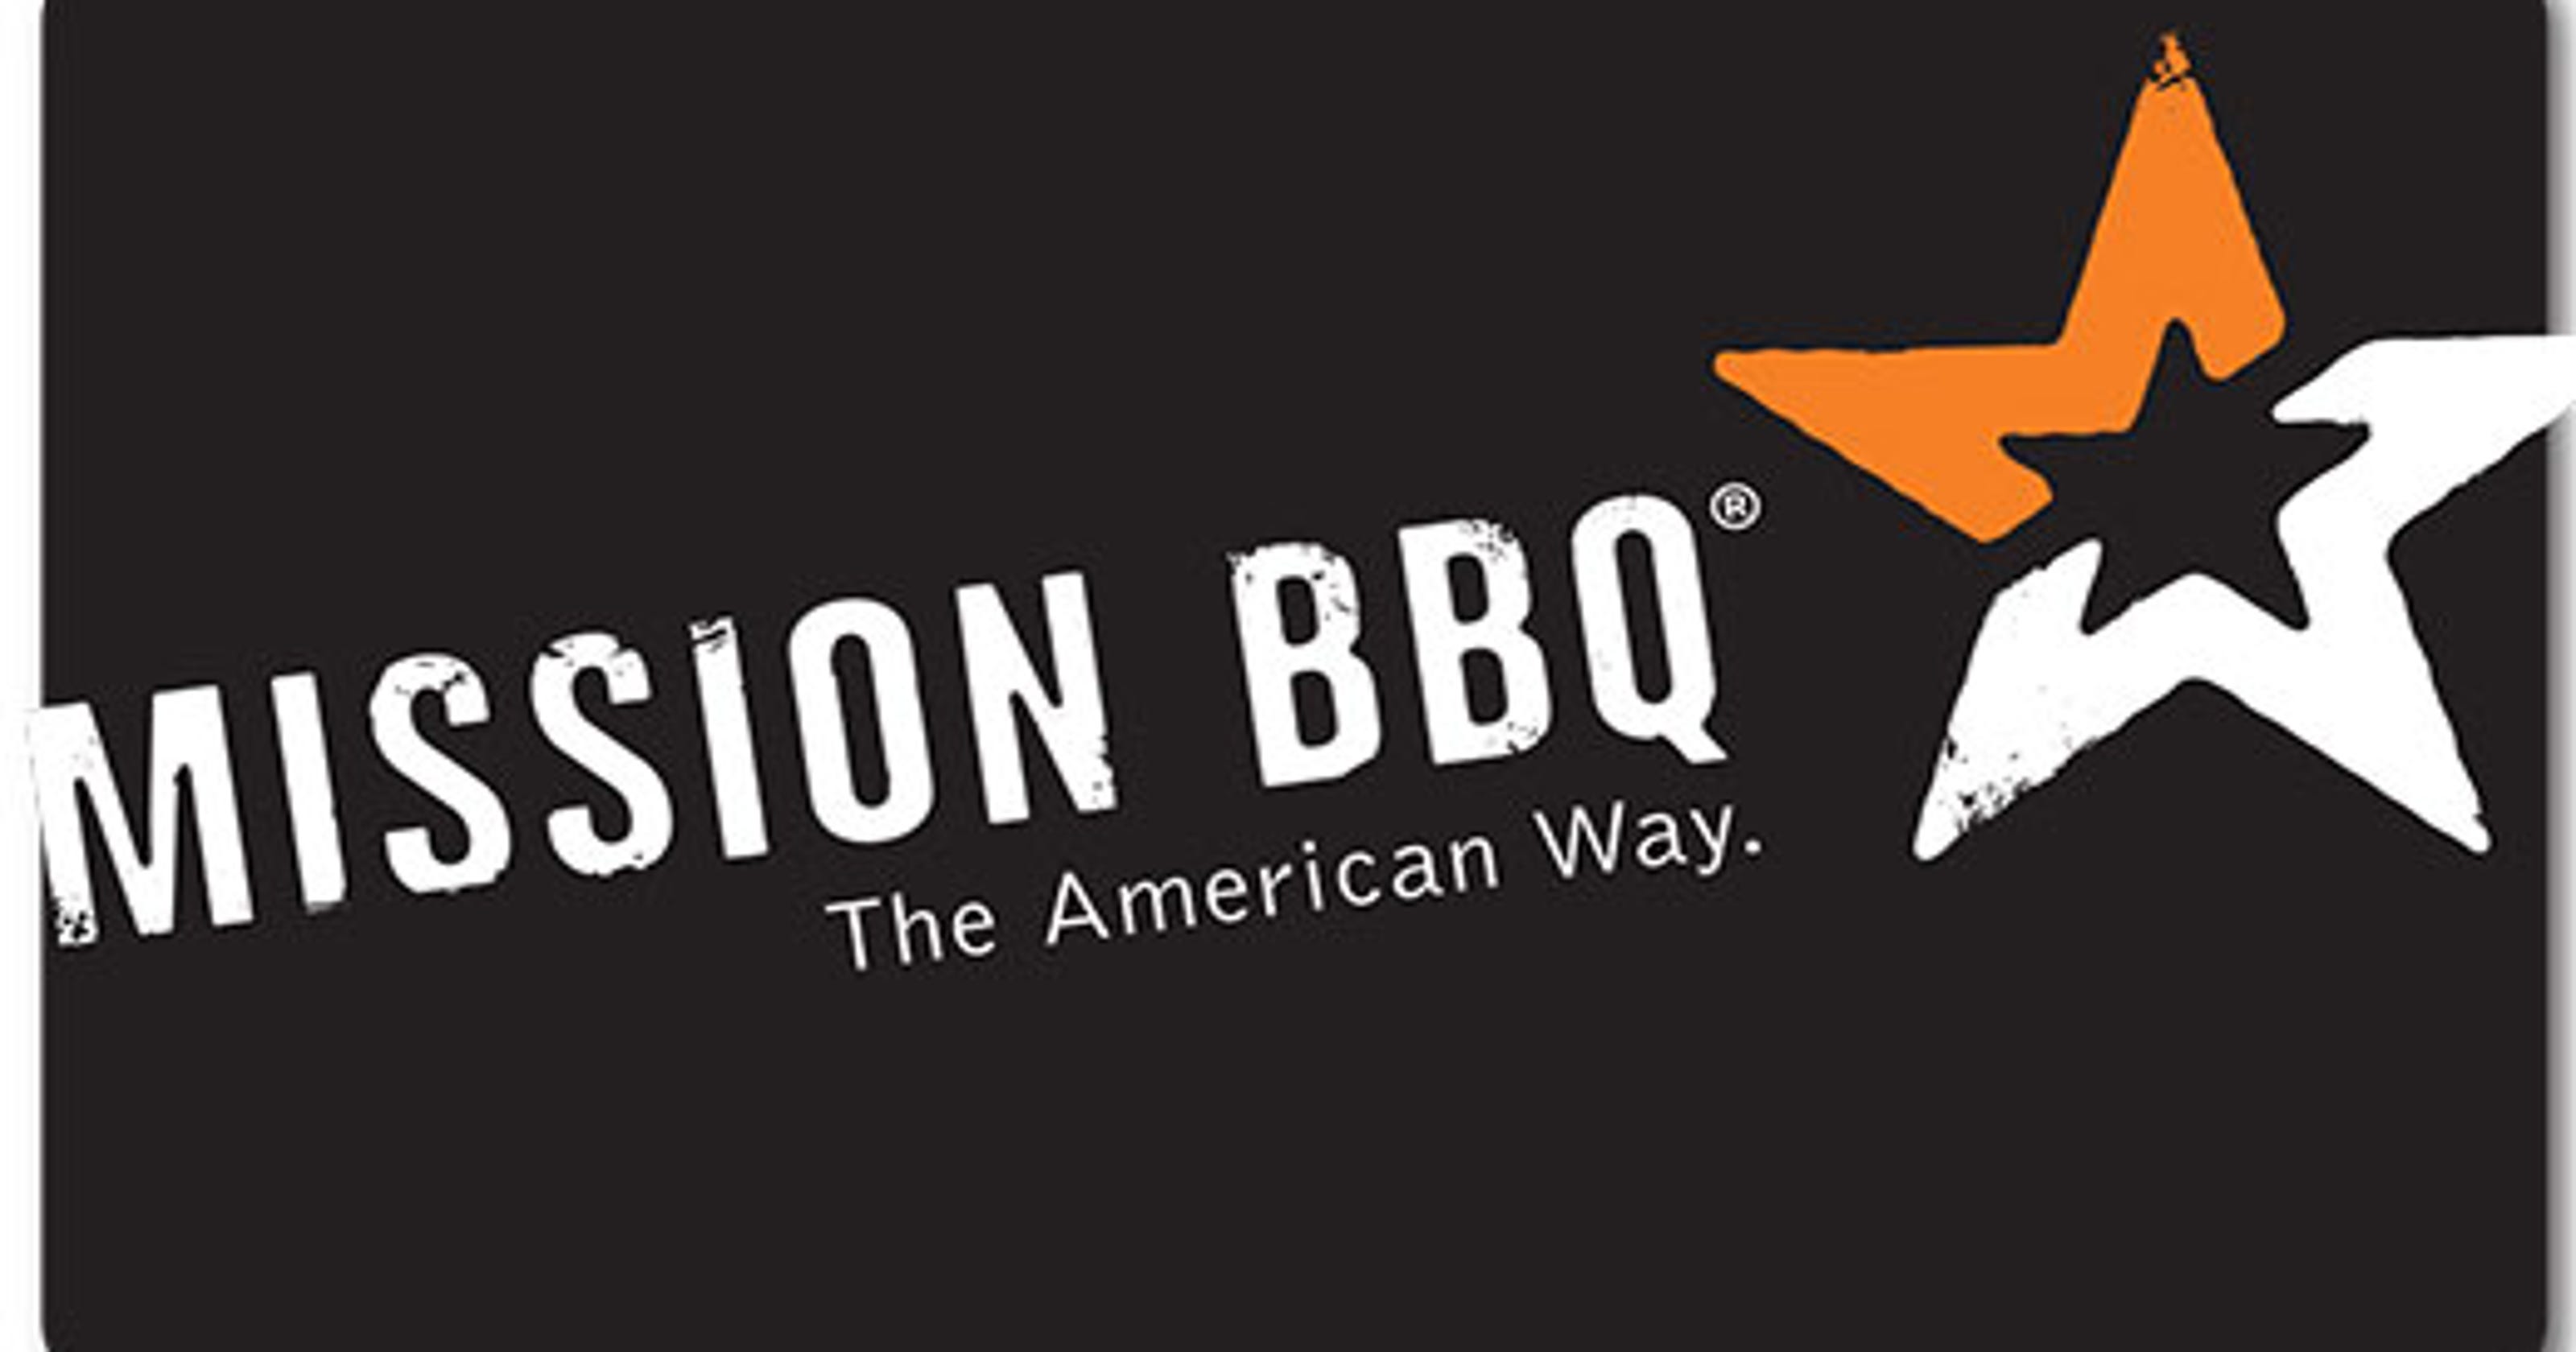 Mission BBQ Deals - wide 5